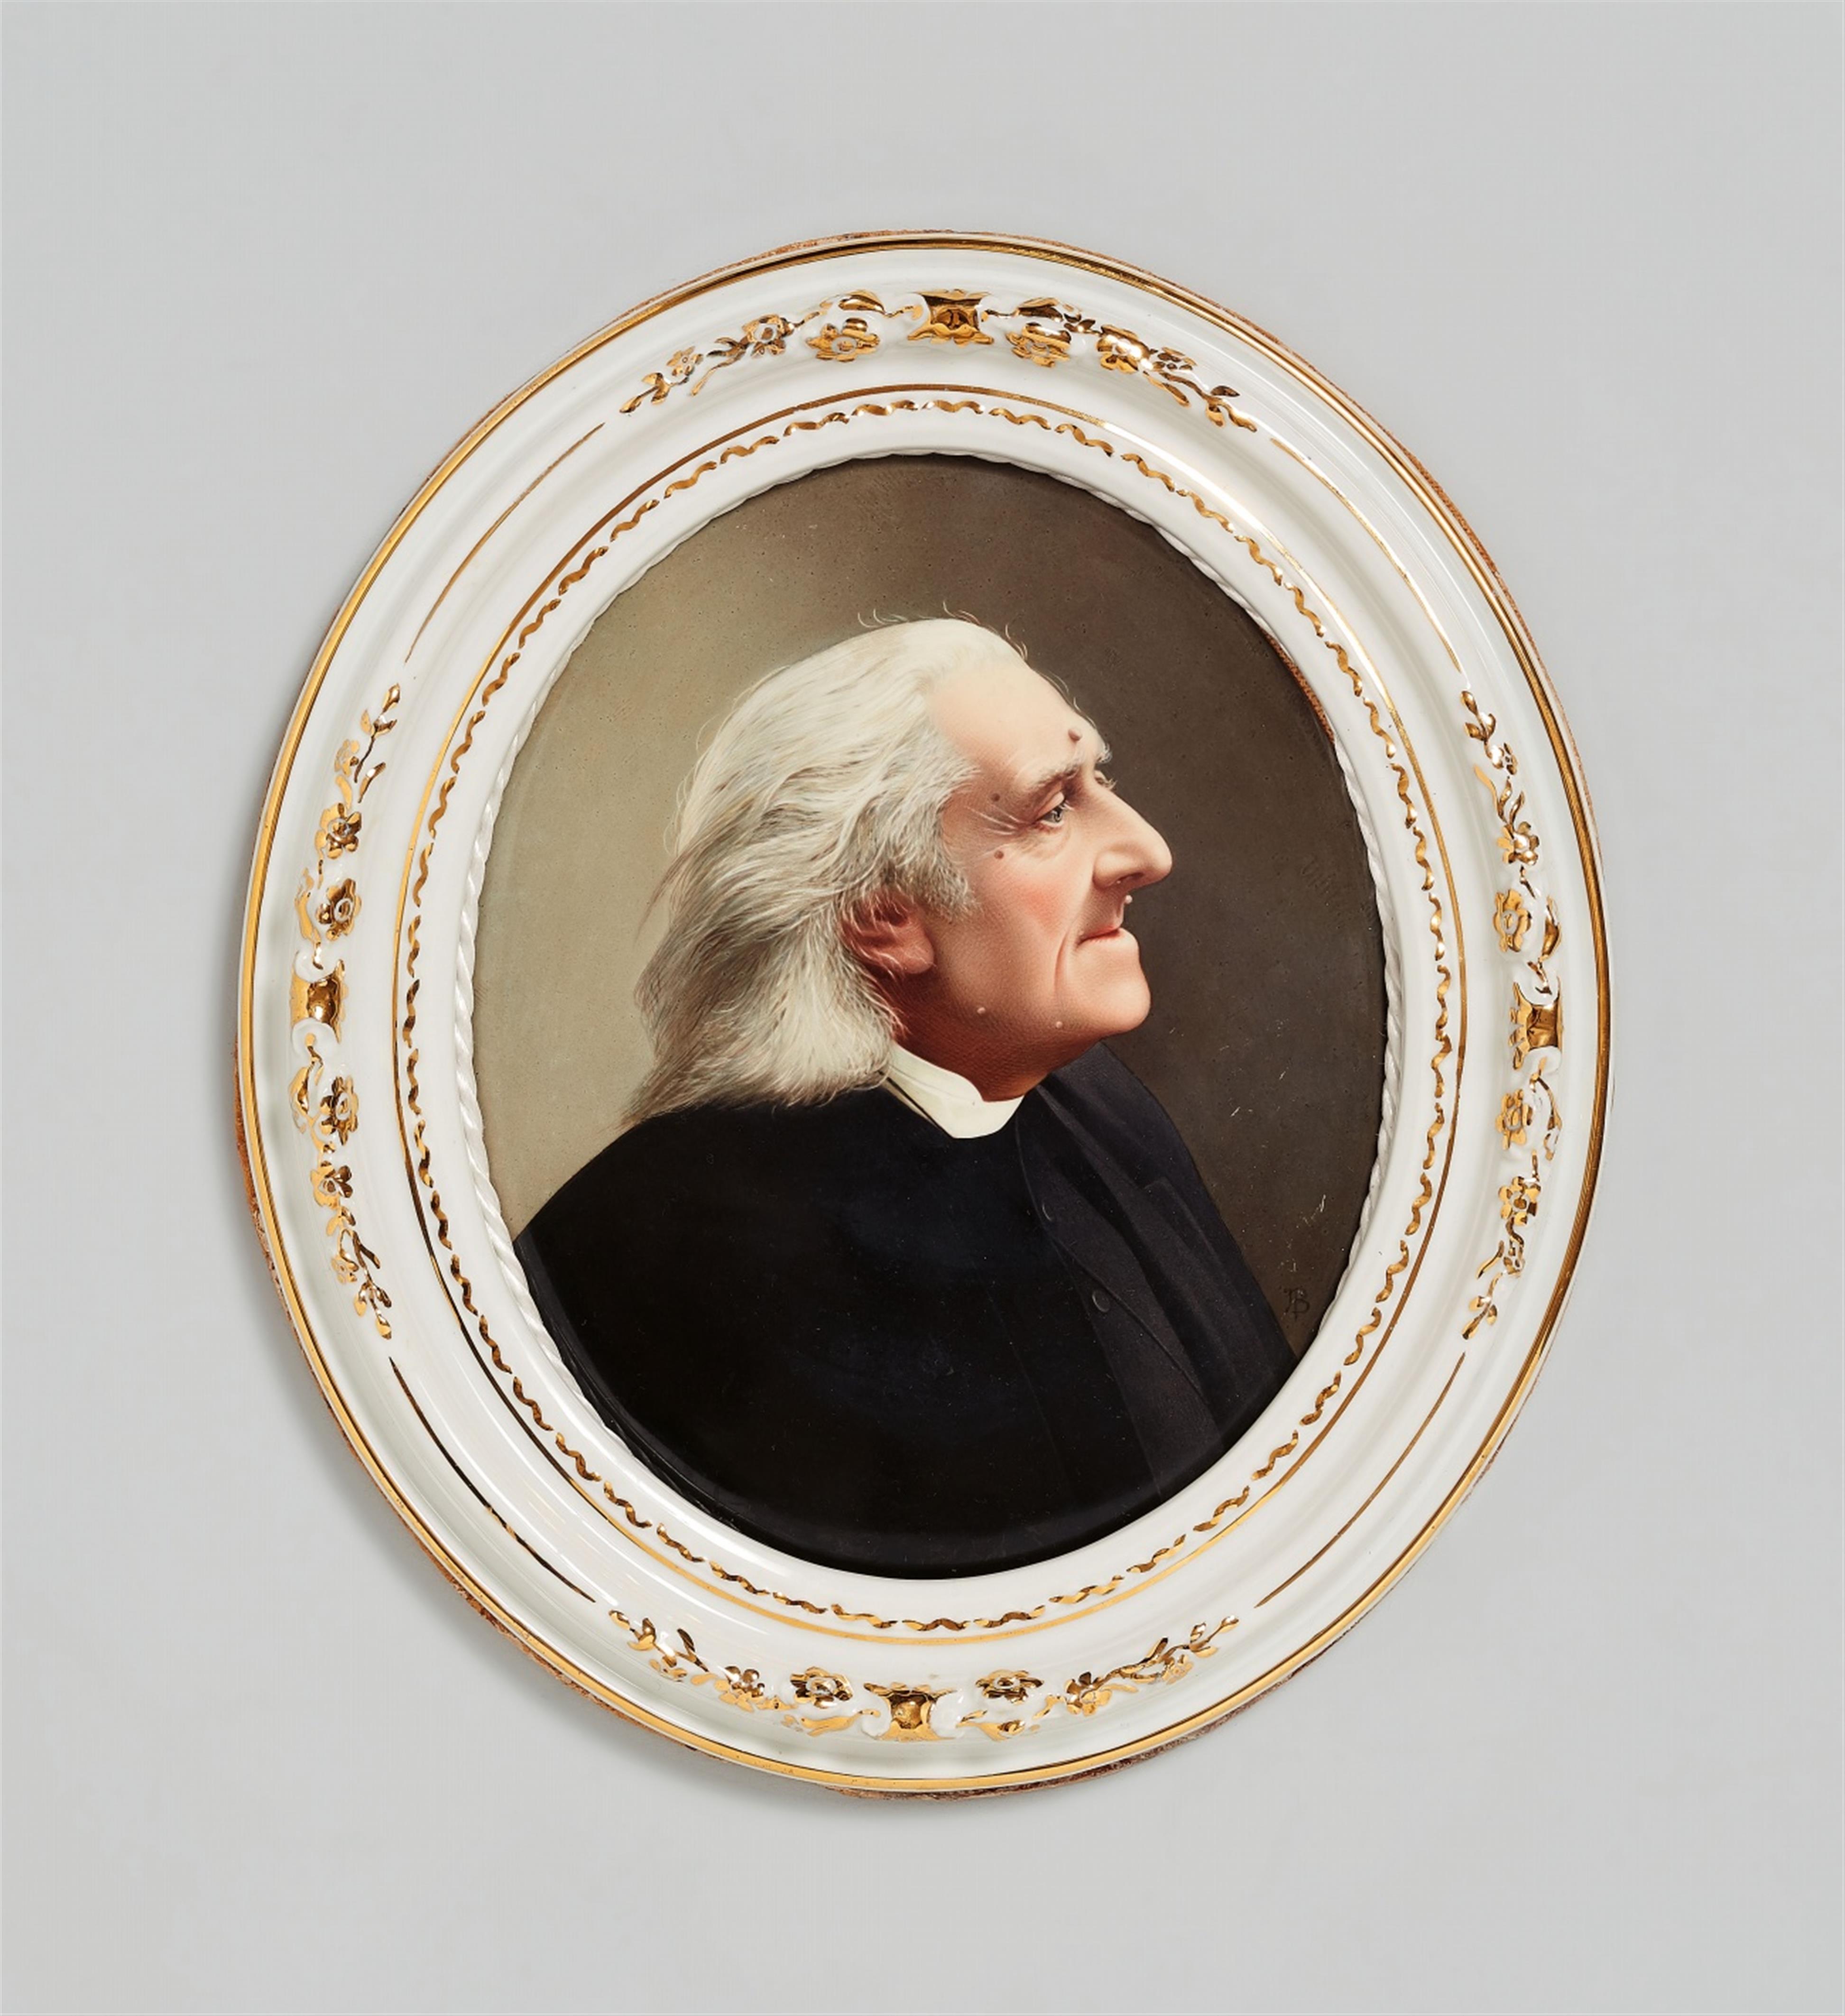 Porzellanbild mit dem Porträt von Franz Liszt - image-1